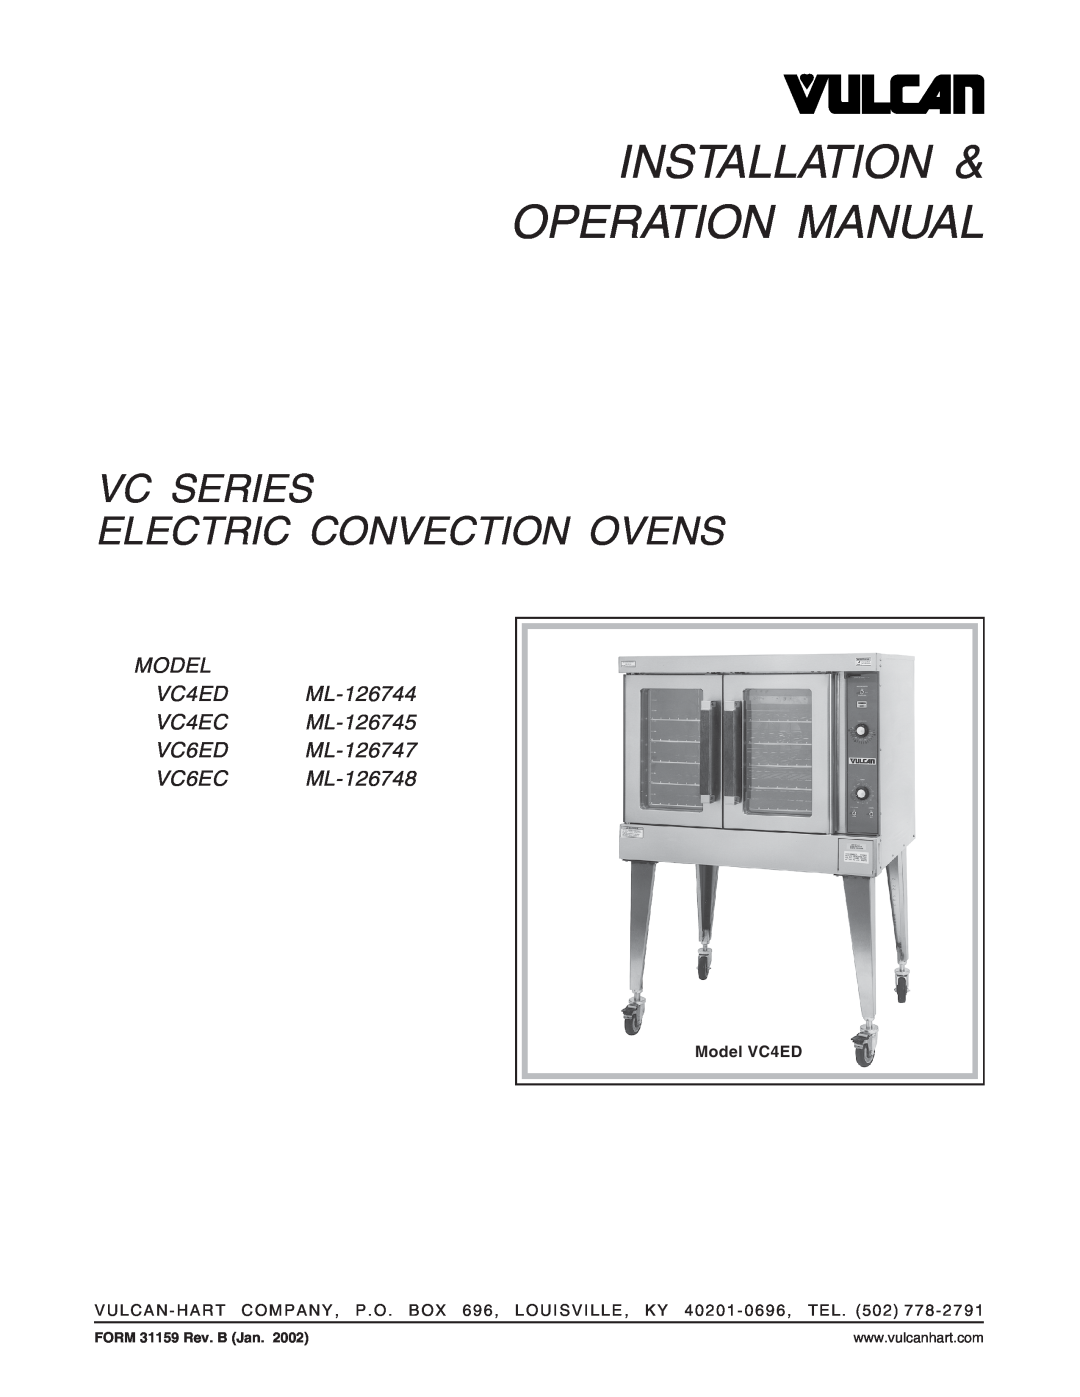 Vulcan-Hart ML-126748 operation manual Vc Series Electric Convection Ovens, MODEL VC4ED ML-126744 VC4EC ML-126745 